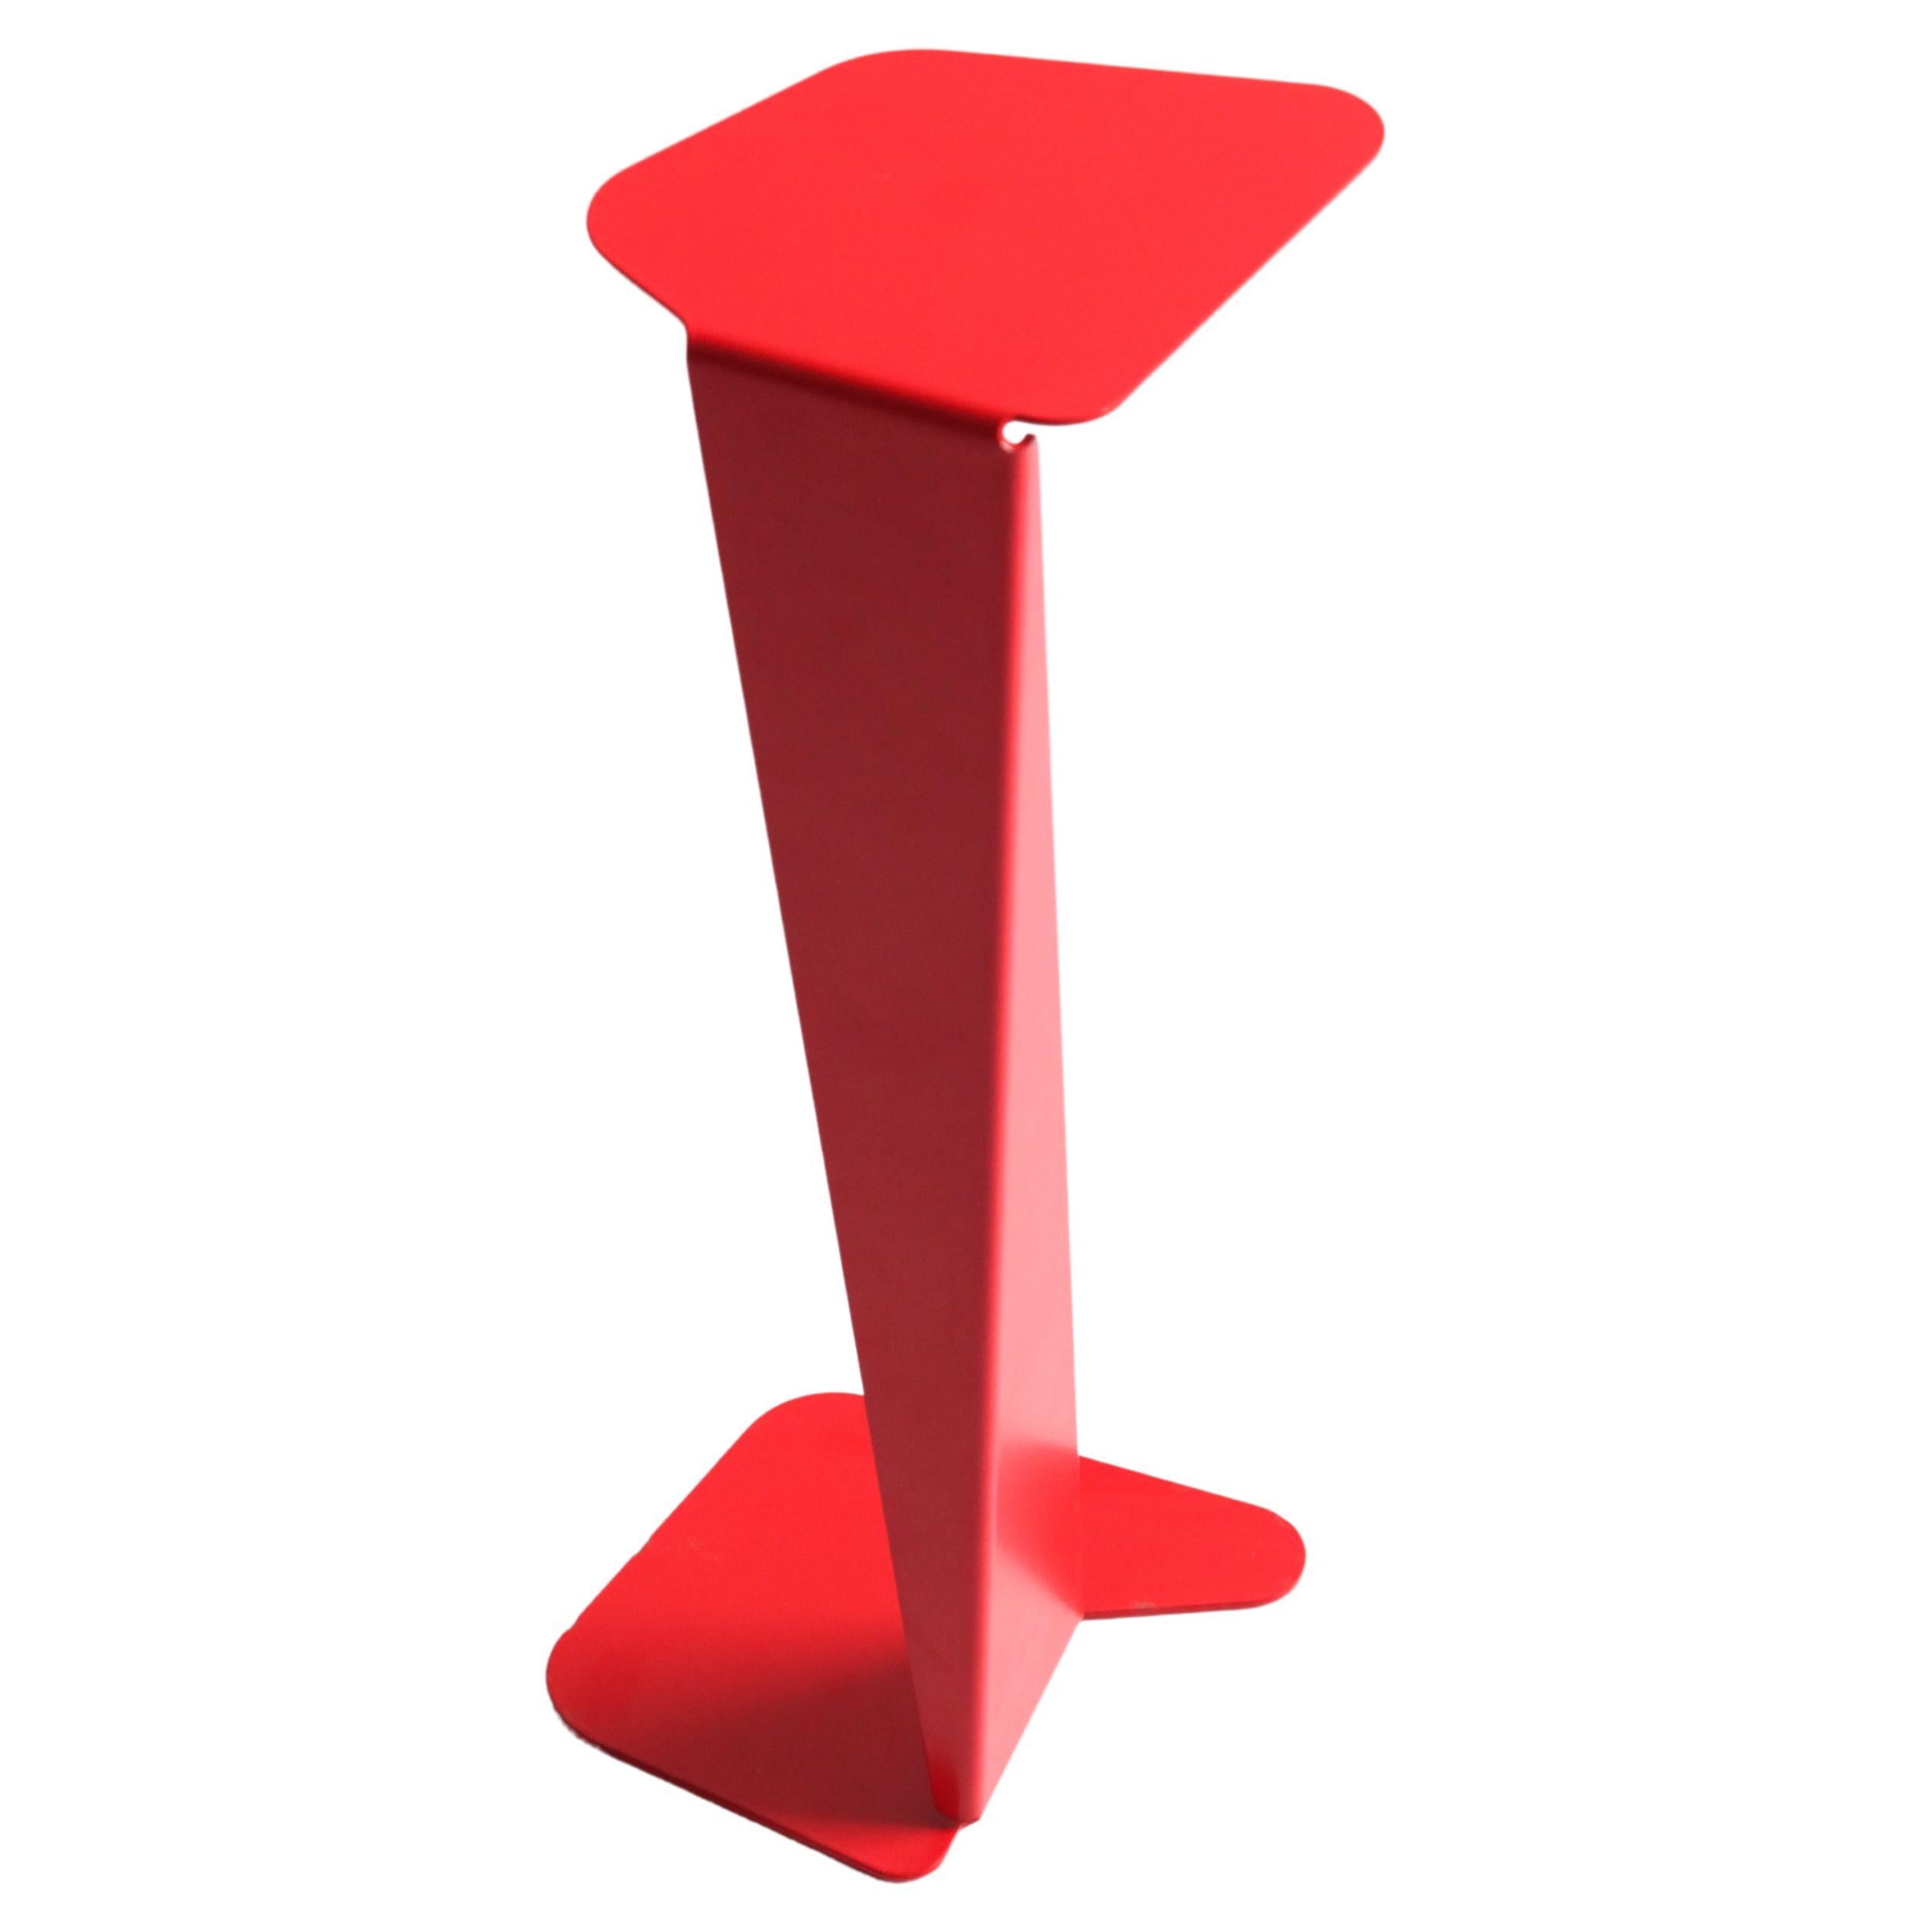 Prototype Gispen Side Table For Sale